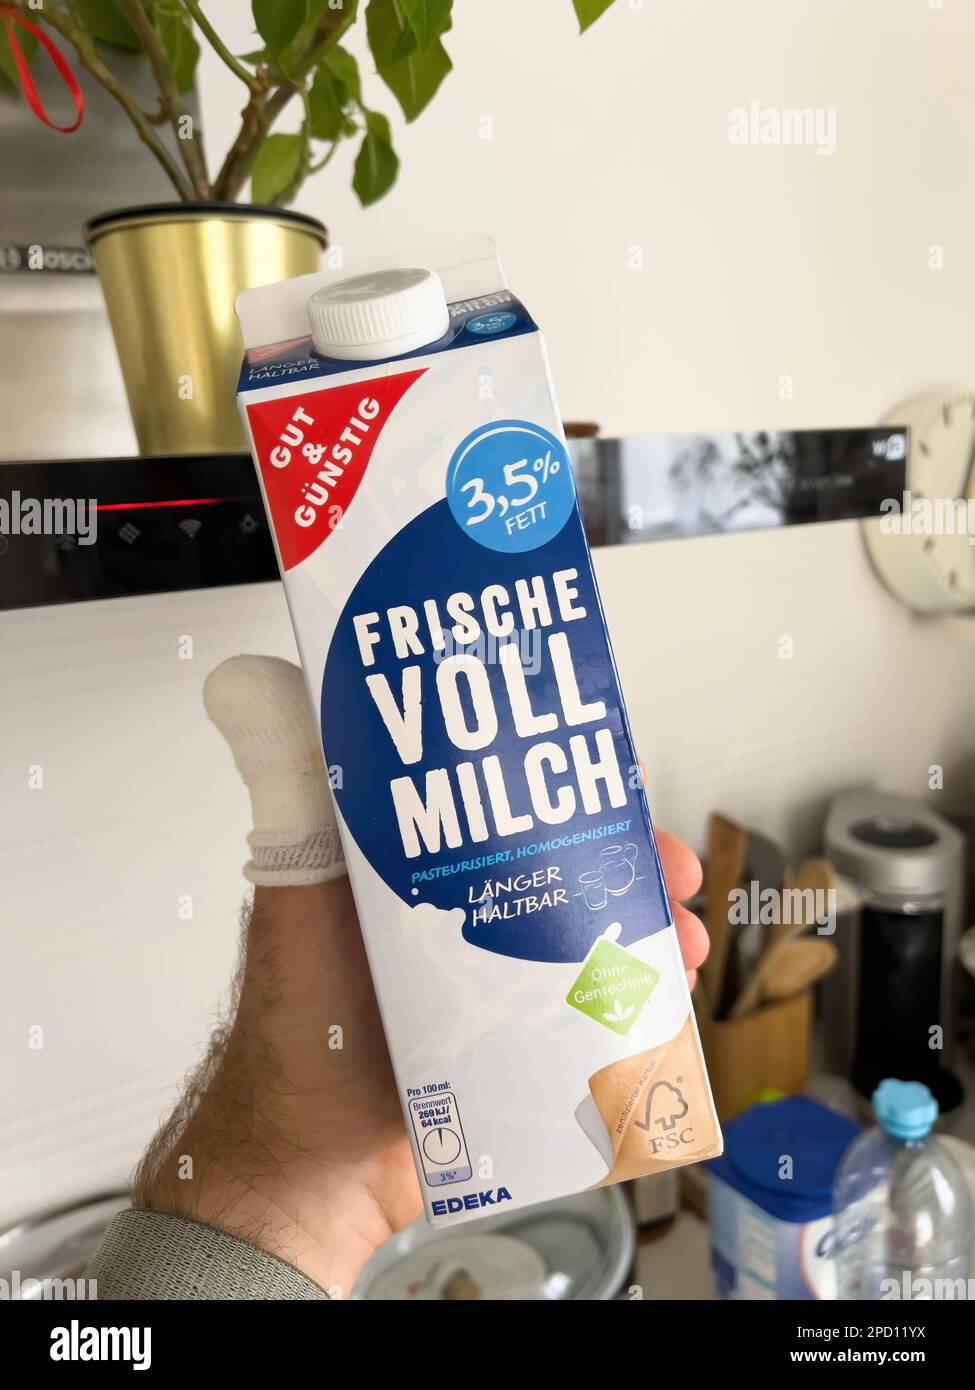 France - May 29, 2022: POV male hand holding Edeka Gut und Gunstig Fresh 3,5 whole milk - kitchen background Stock Photo